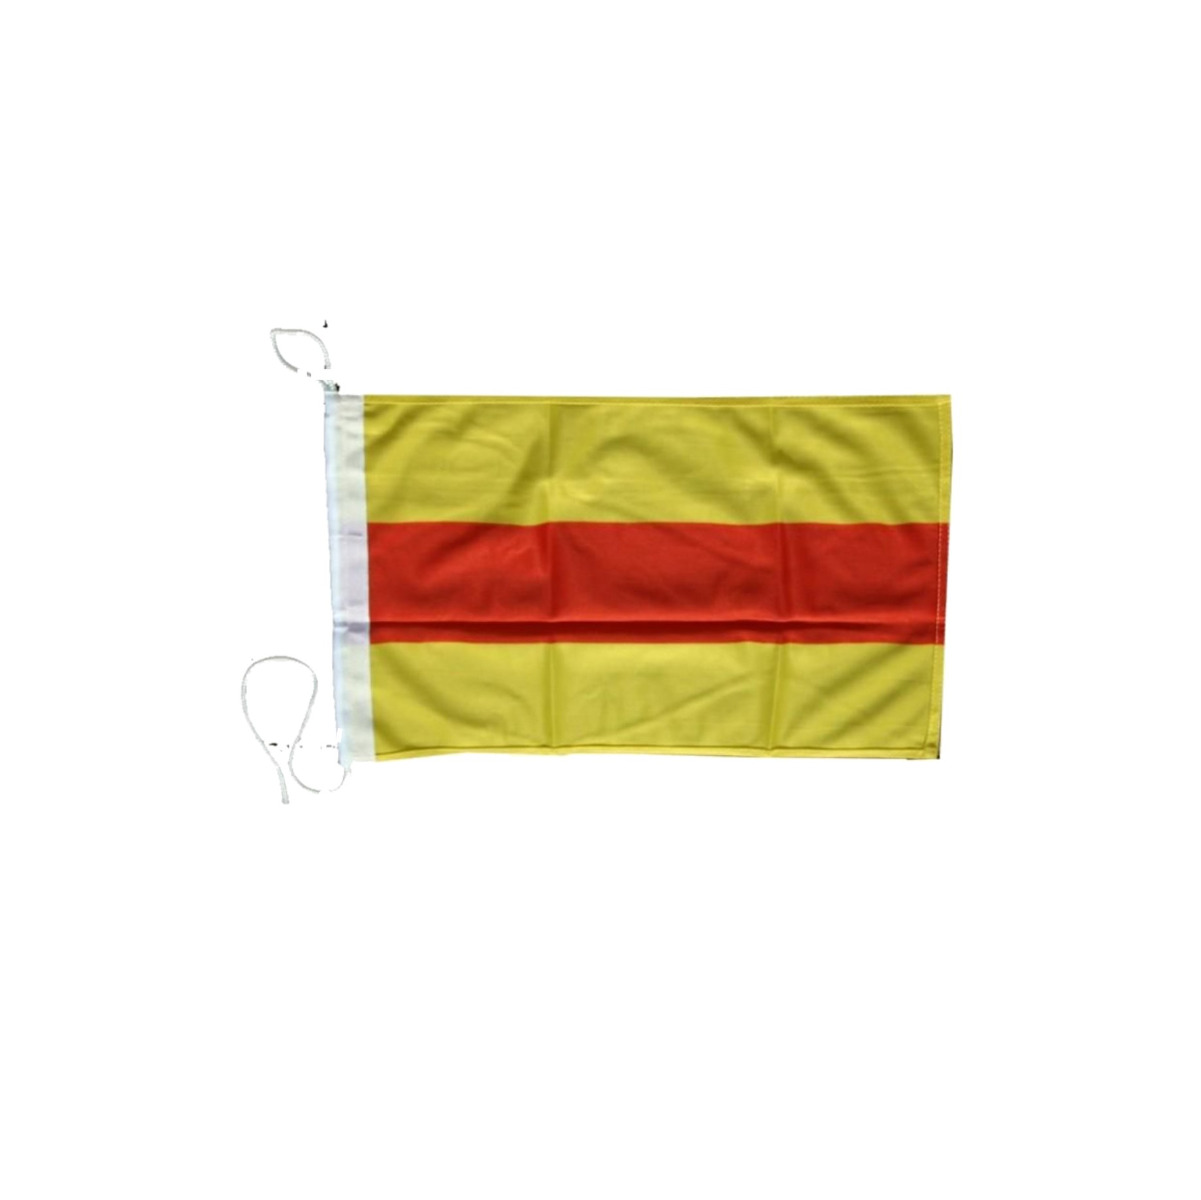 Bootsfahne / Motorradfahne "Baden" (gelb-rot-gelb)  